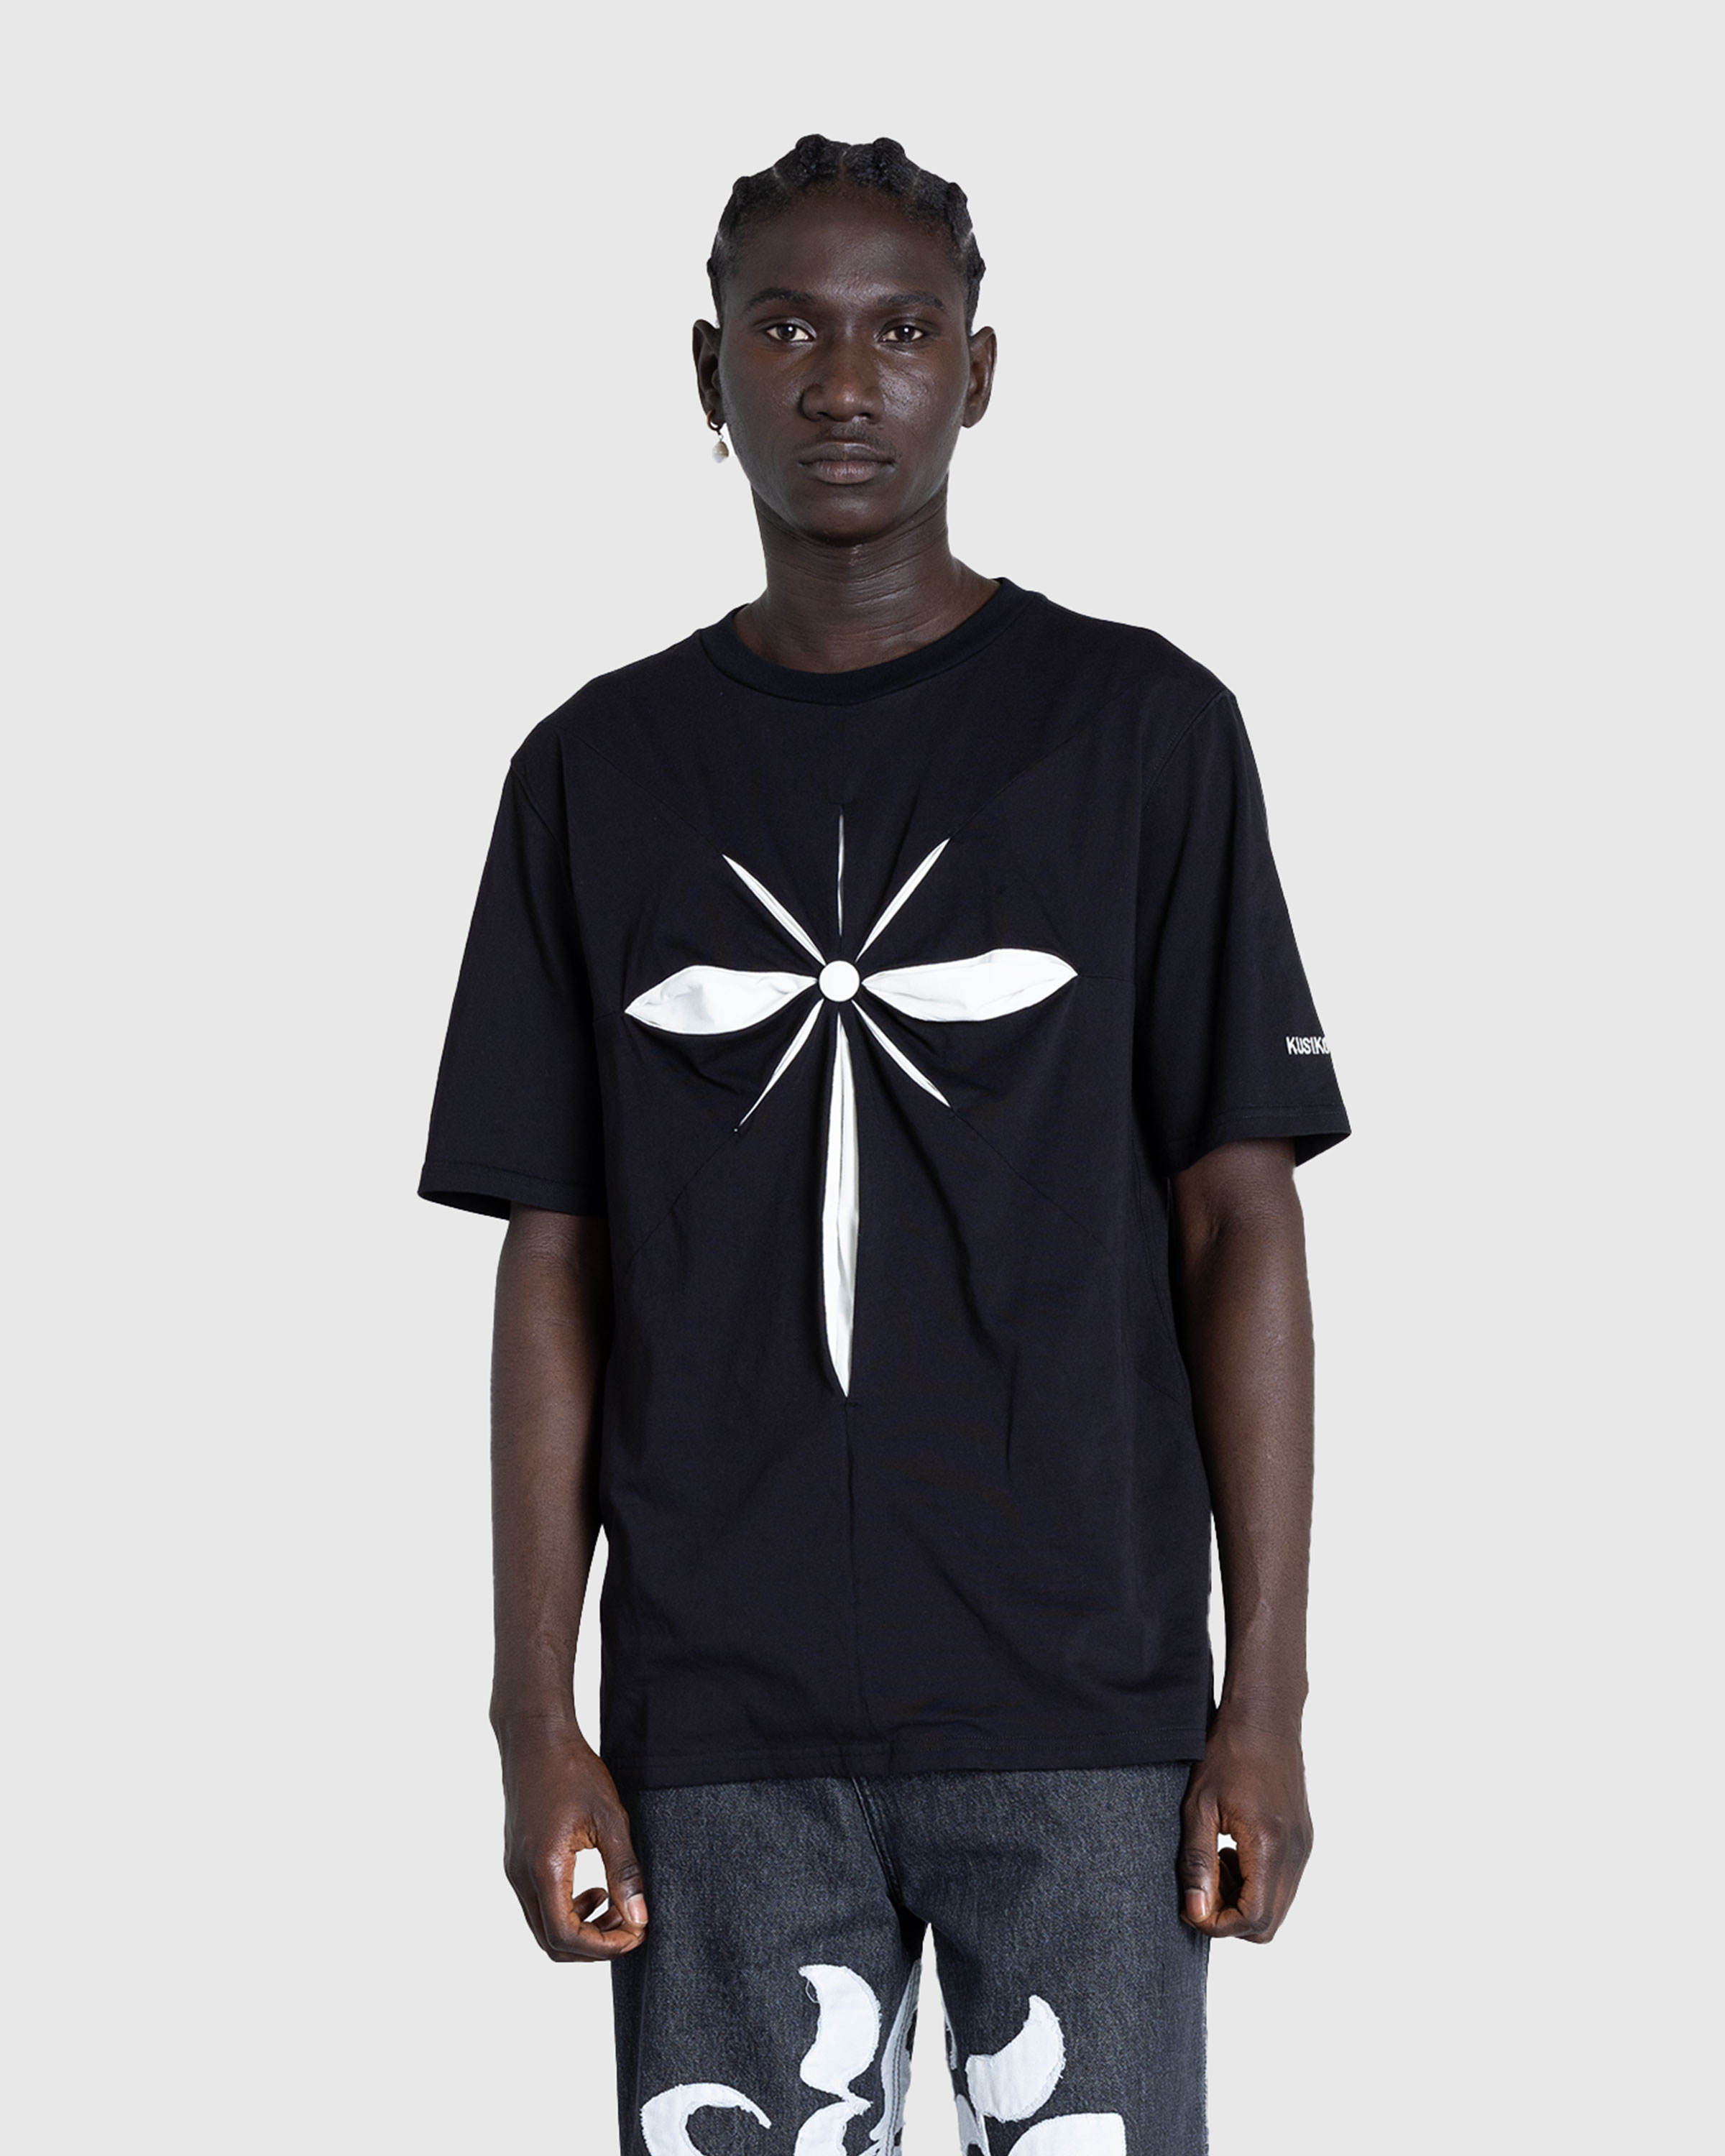 KUSIKOHC – Origami T-Shirt Black/White Alyssum - Tops - Black - Image 2